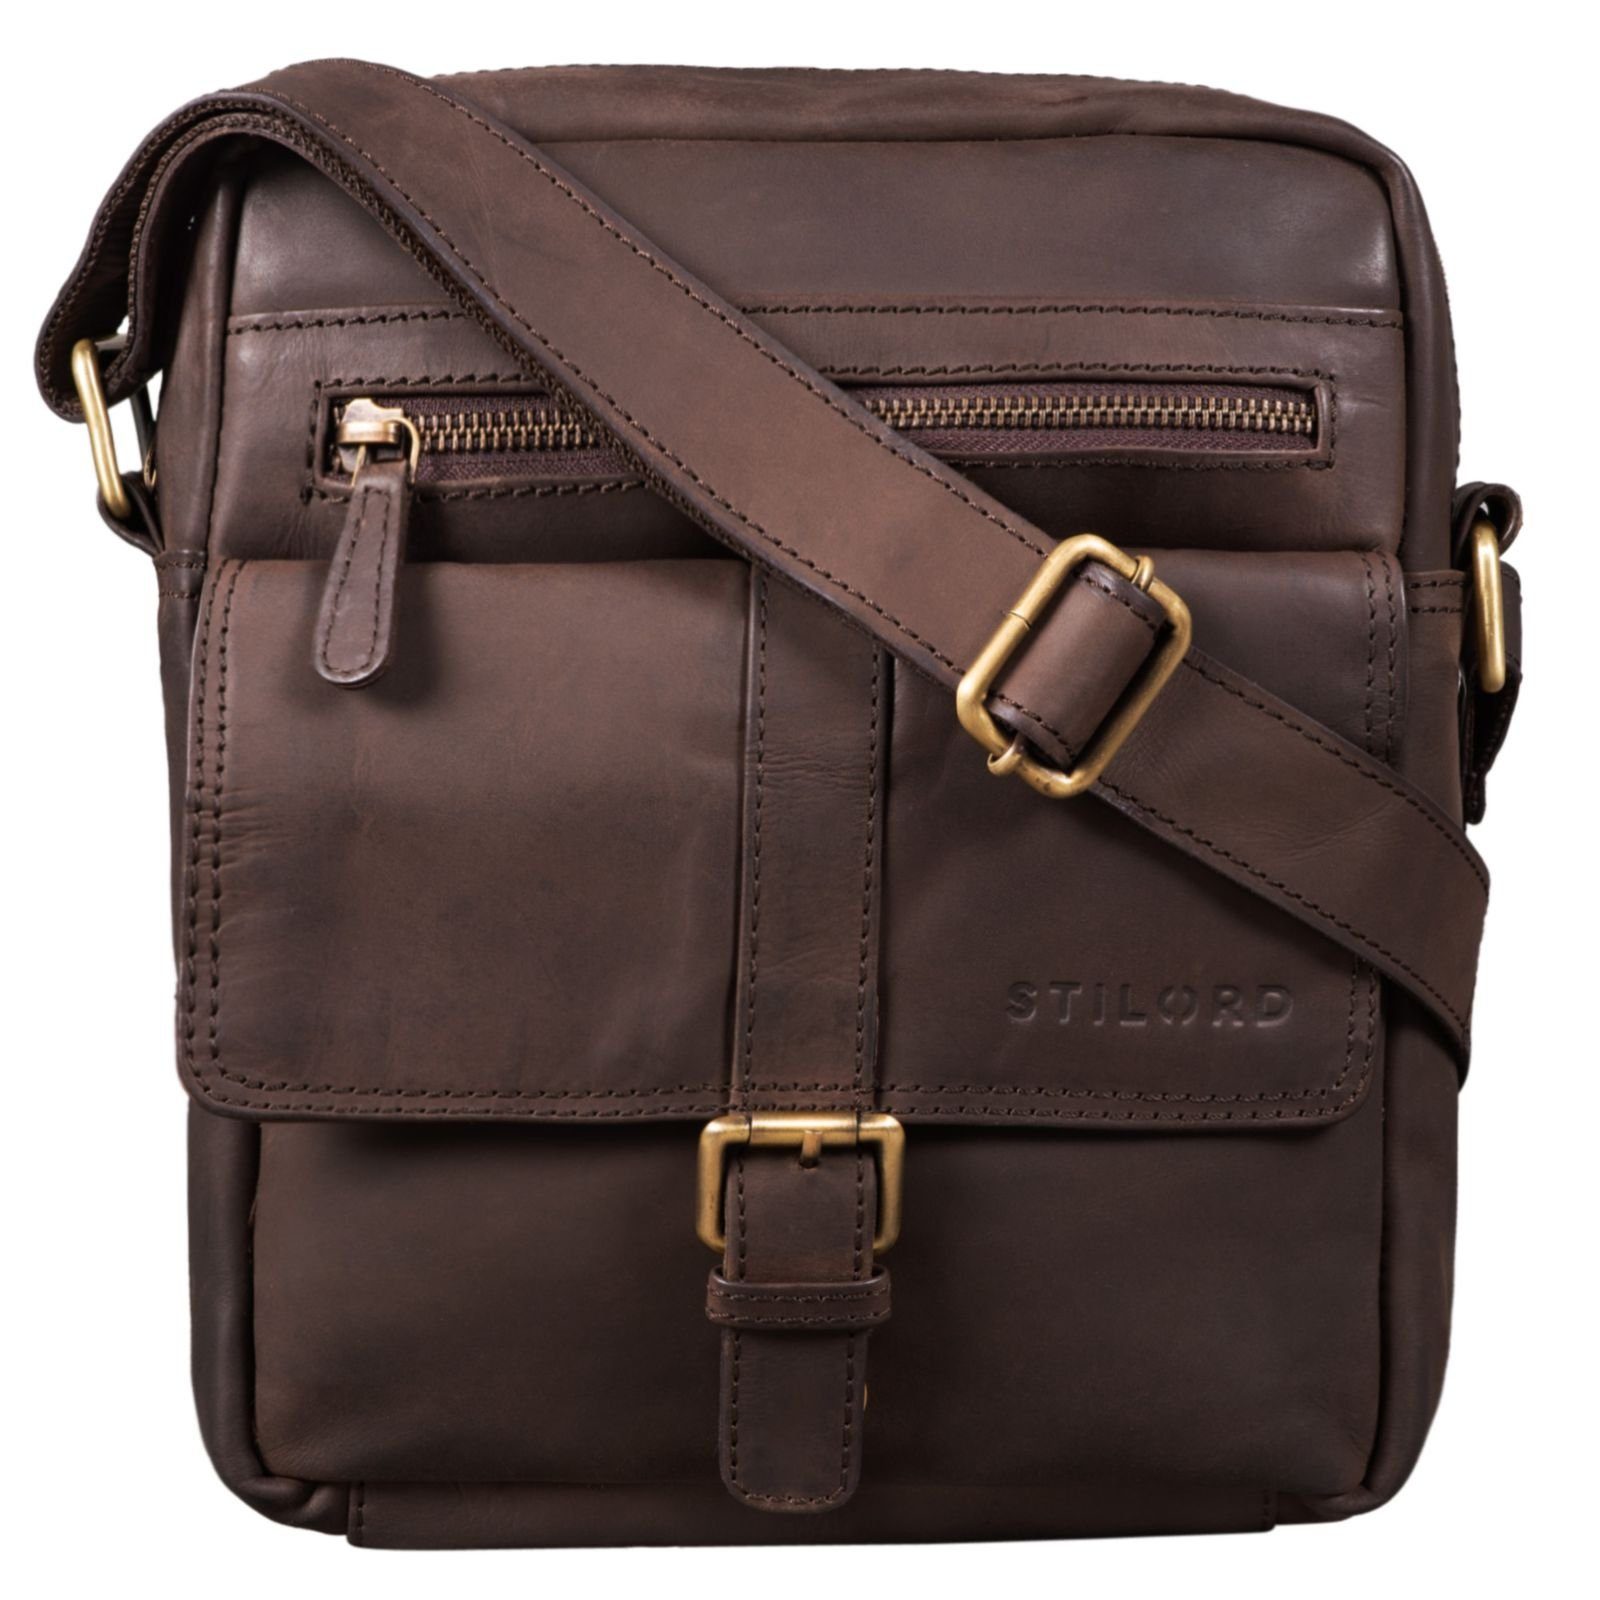 STILORD Messenger Bag "Dany" Kleine Leder Tasche zum Umhängen matt - dunkelbraun